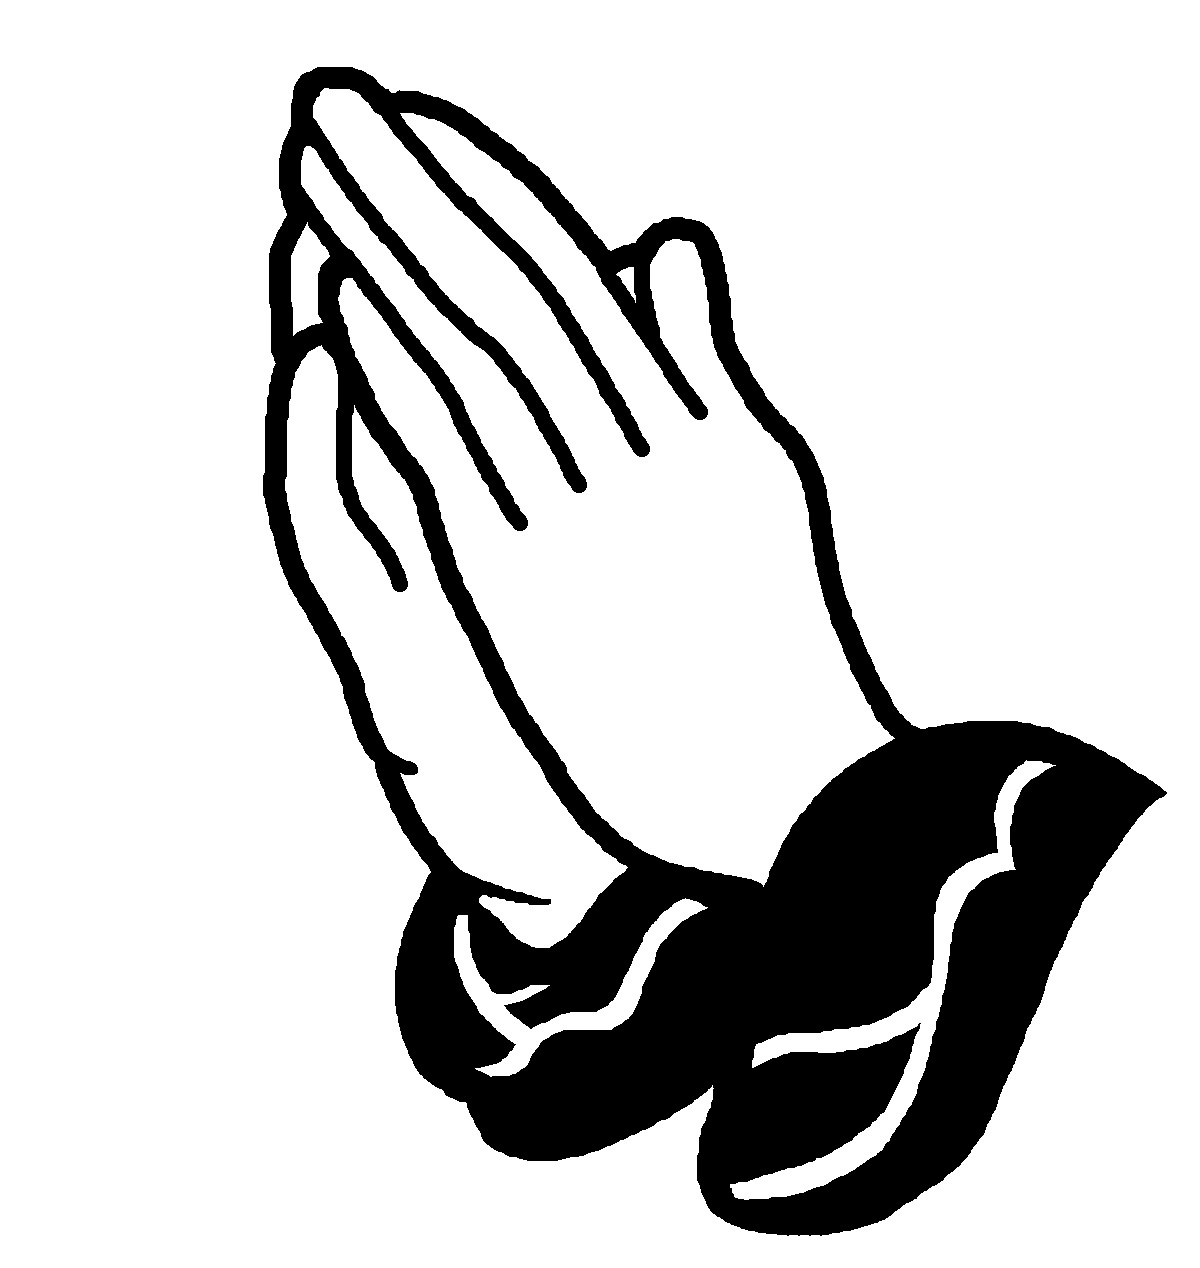 Both Hand Praying - ClipArt Best